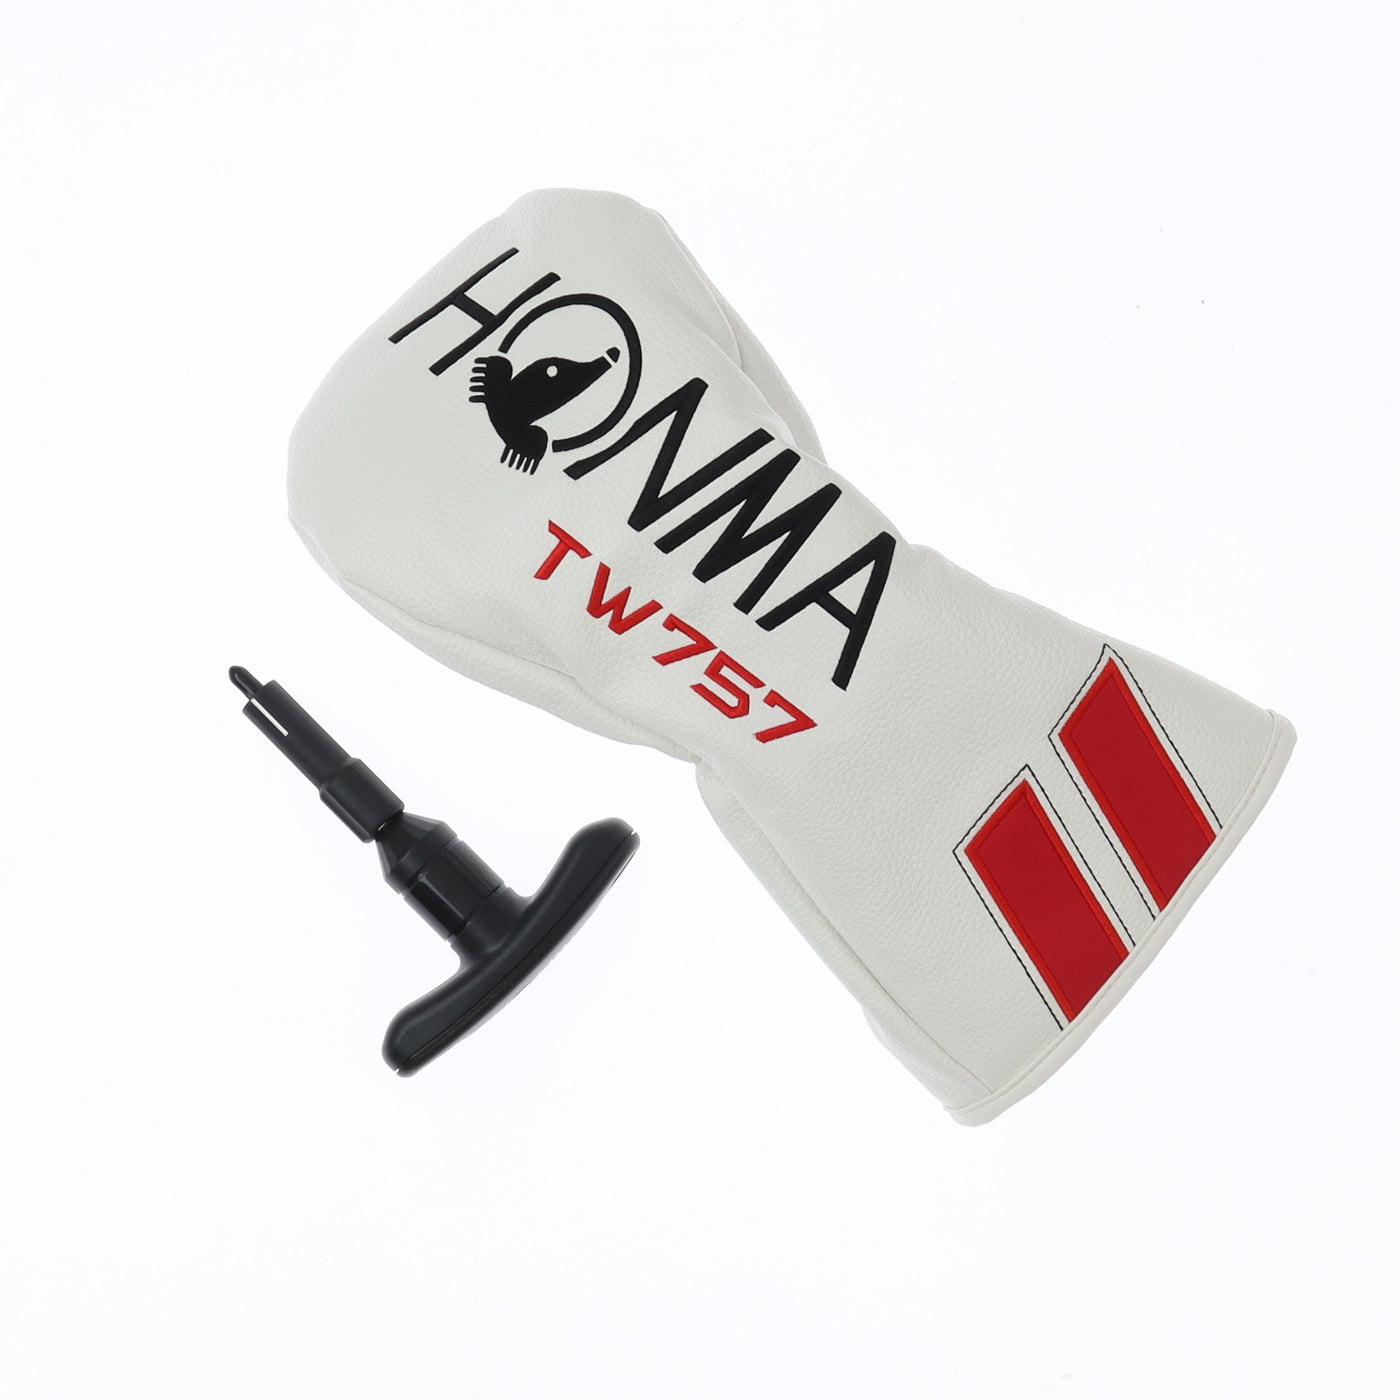 HONMA Driver TOUR WORLD TW757 D PLUS 10.5° Stiff VIZARD MA 5